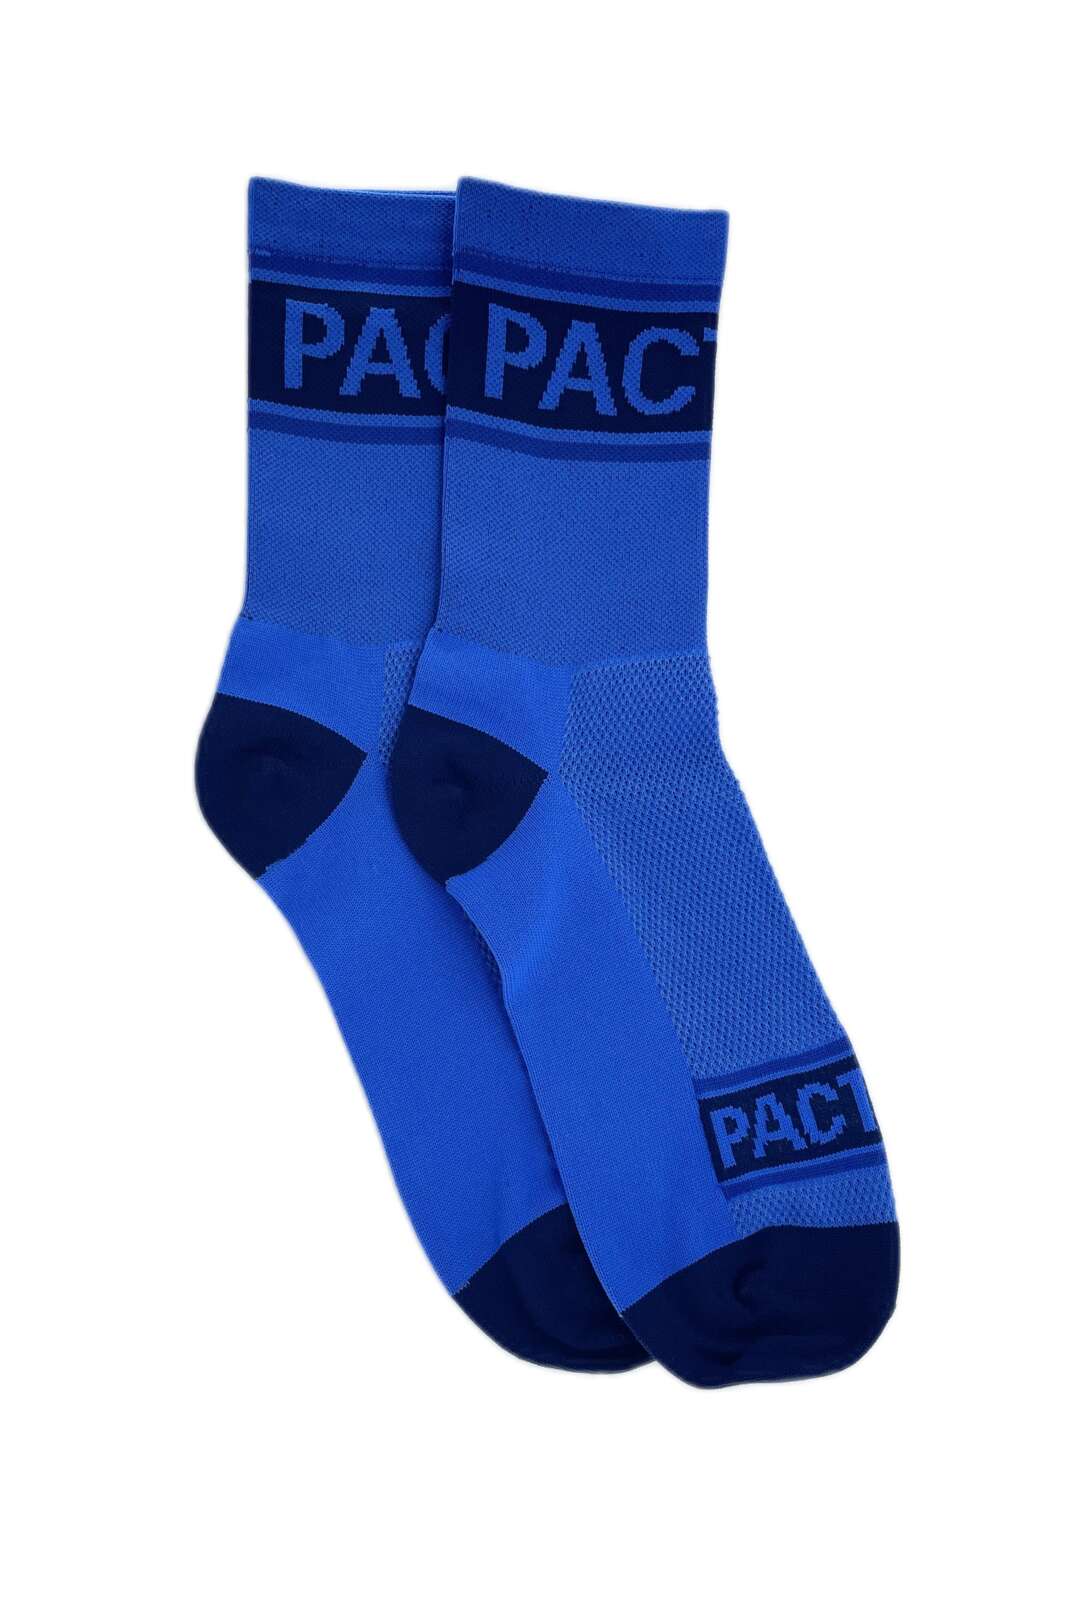 Blue Cycling Socks - Ascent